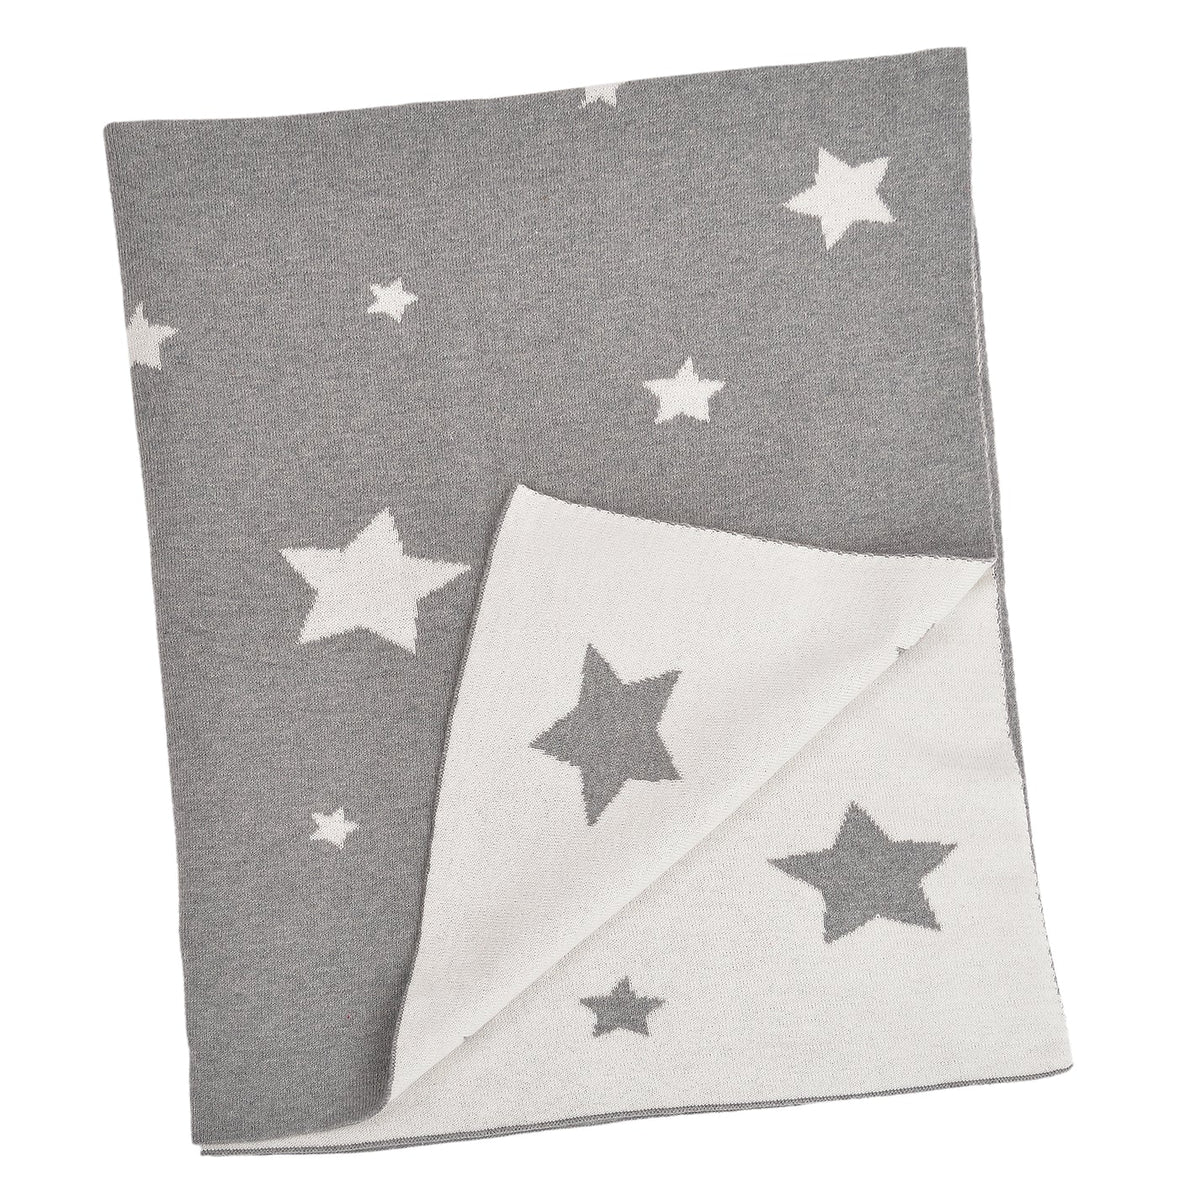 Baby Stars Blanket Grey/White Reversible 100% Cotton 30"x 40"